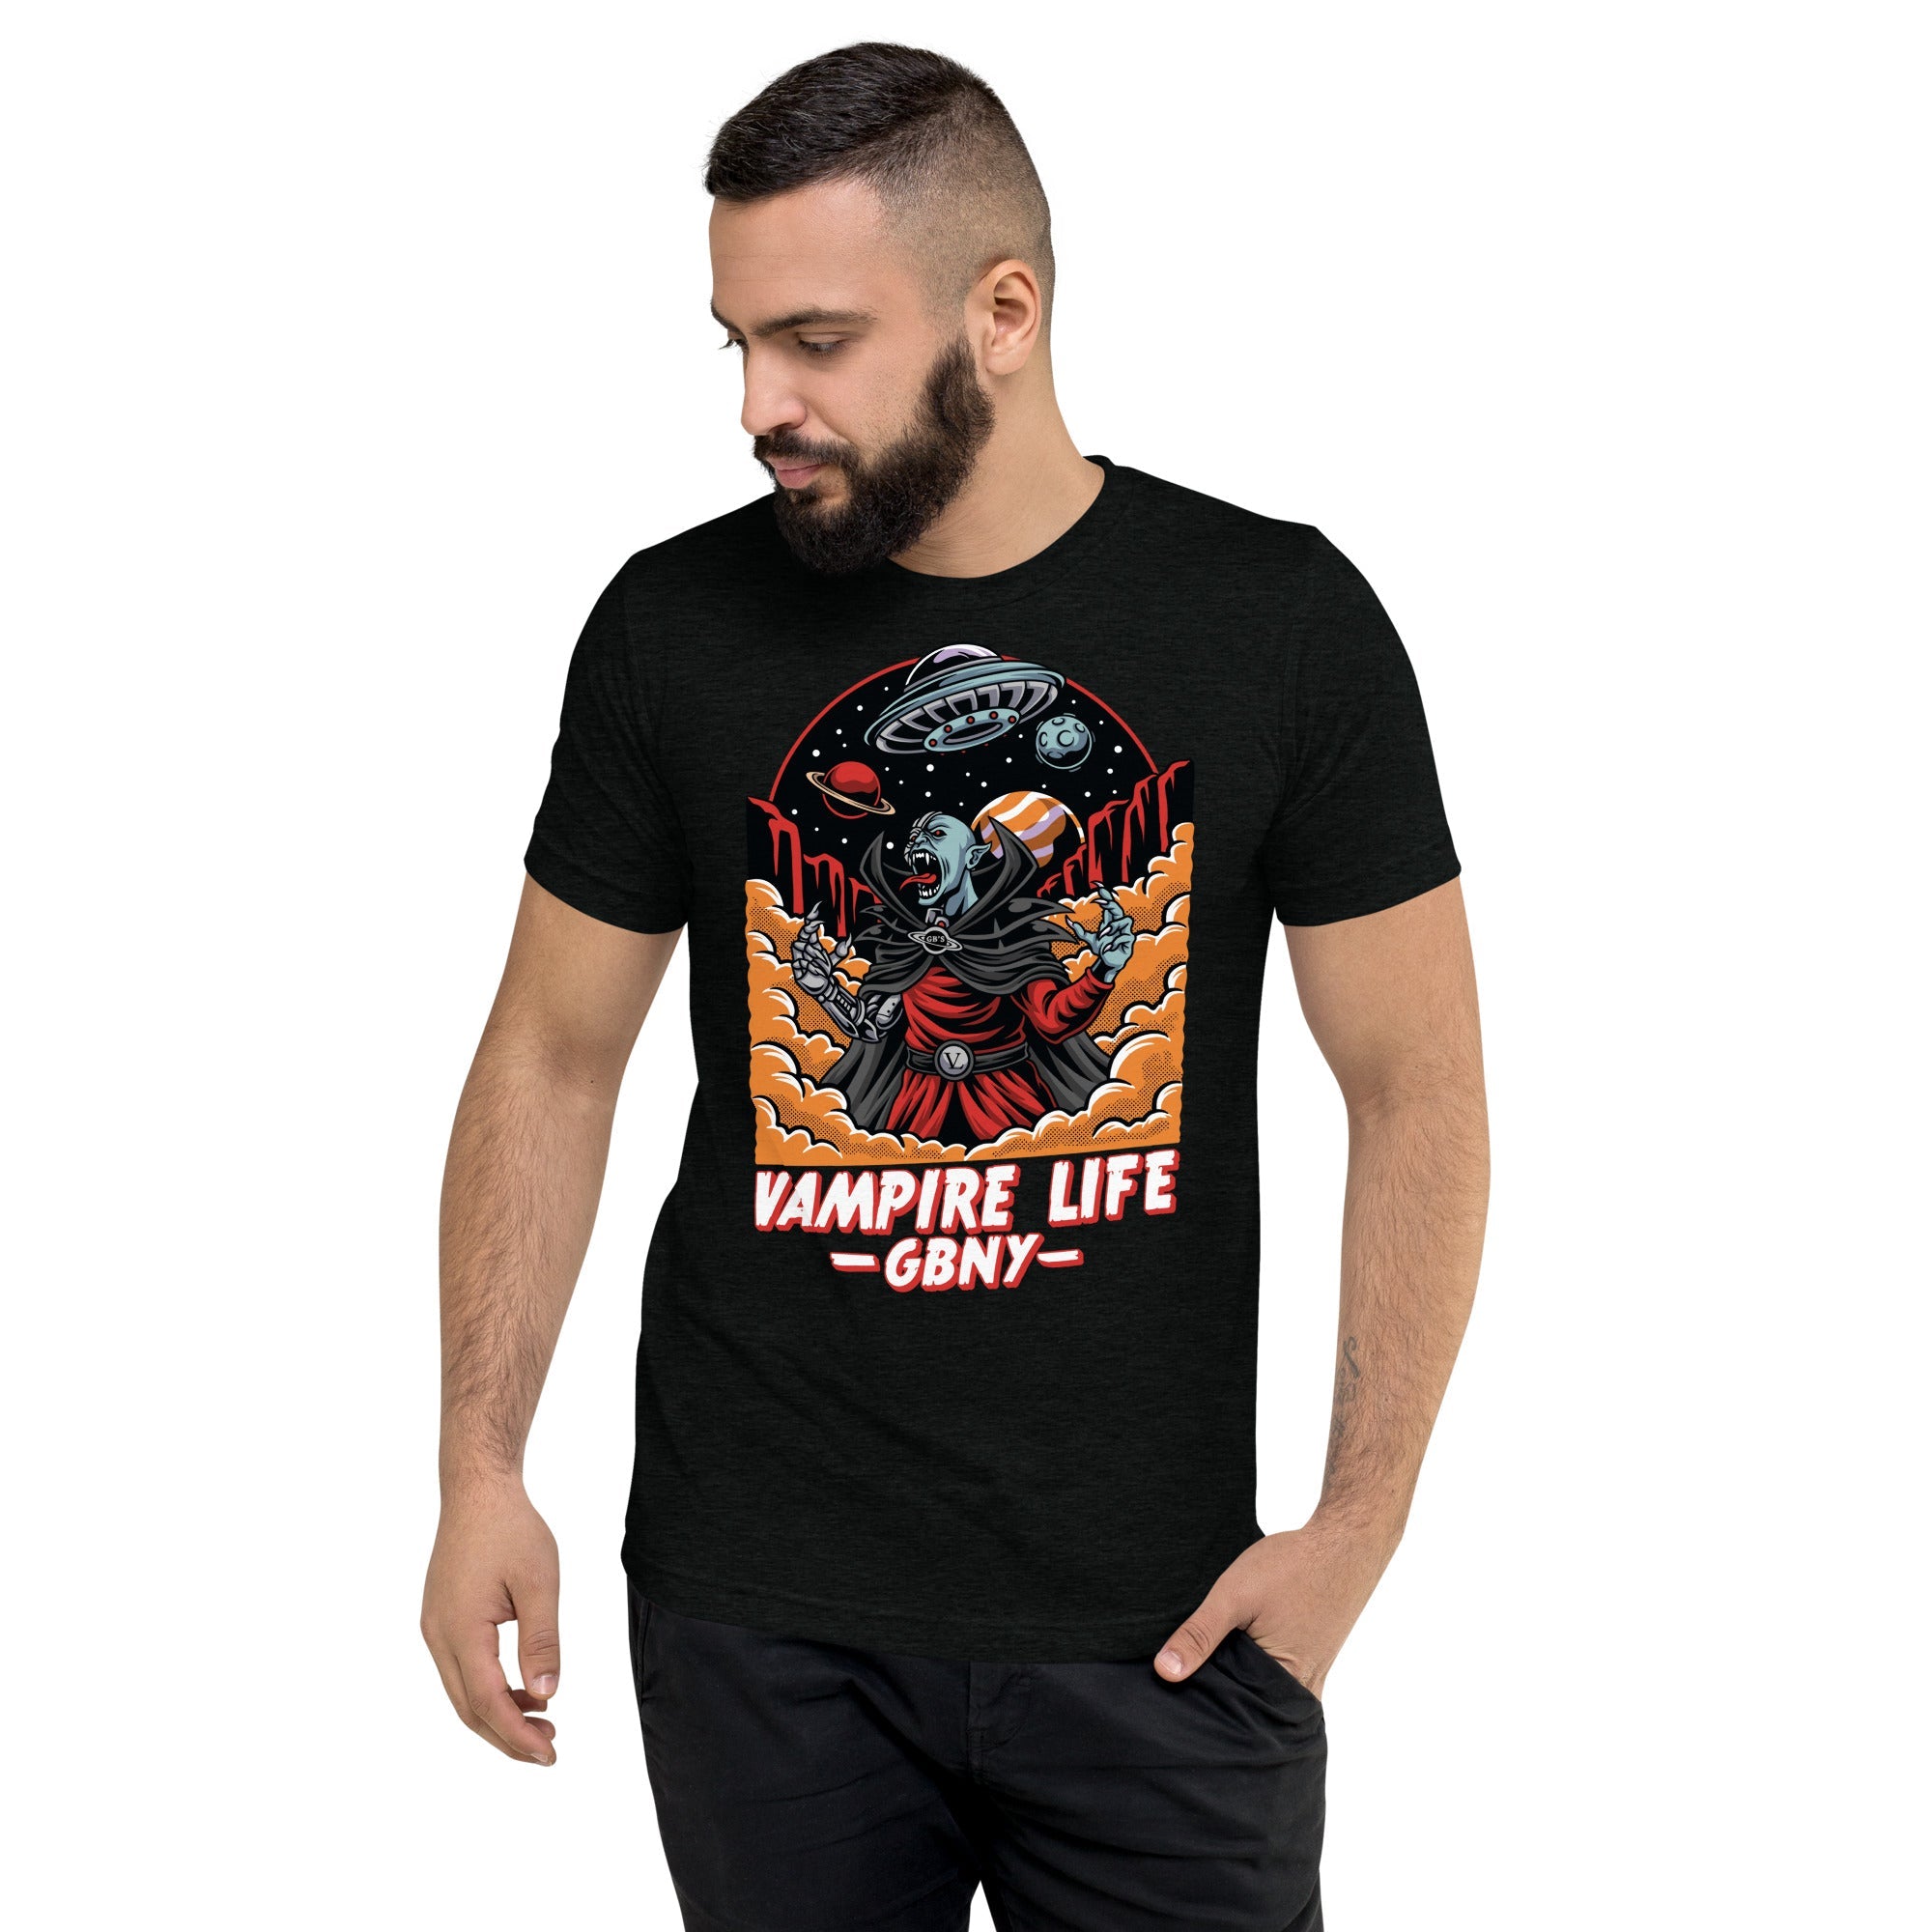 GBNY Solid Black Triblend / XS Vamp Life X GBNY "Space Vampire" T-shirt - Men's 3872353_6584